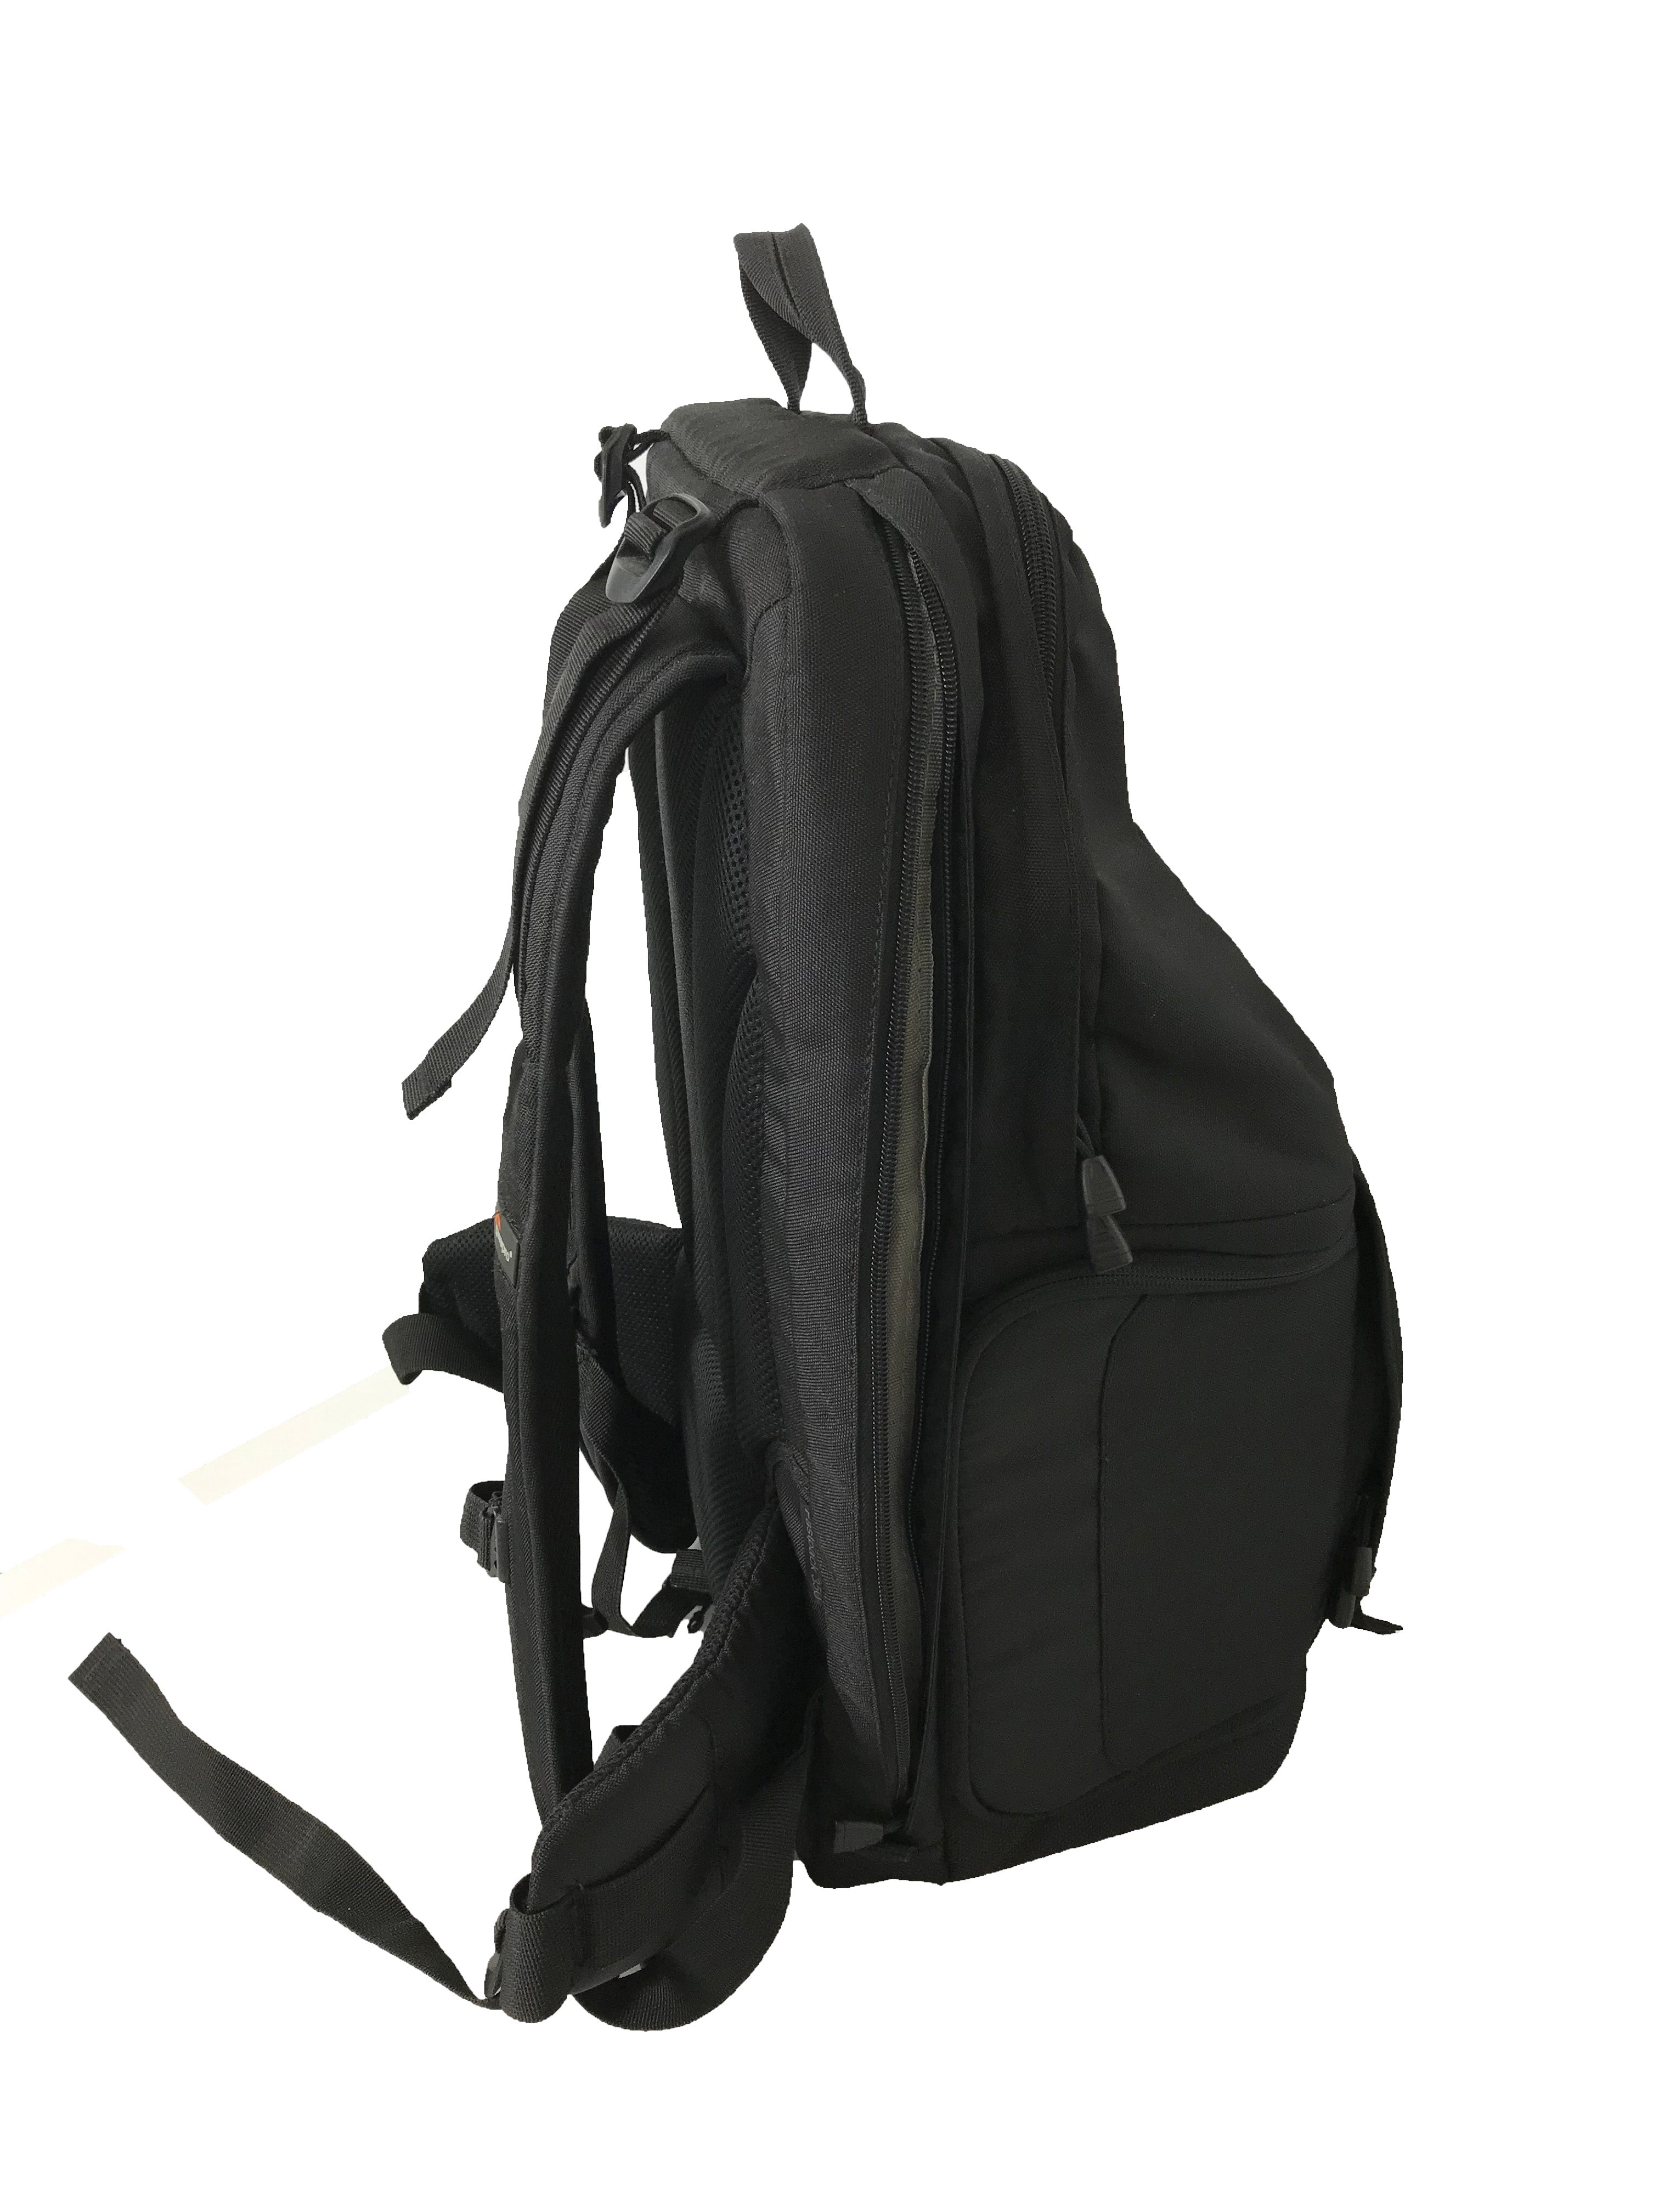 Lowepro Black Fastpack BP 250 13x18 Camera Backpack